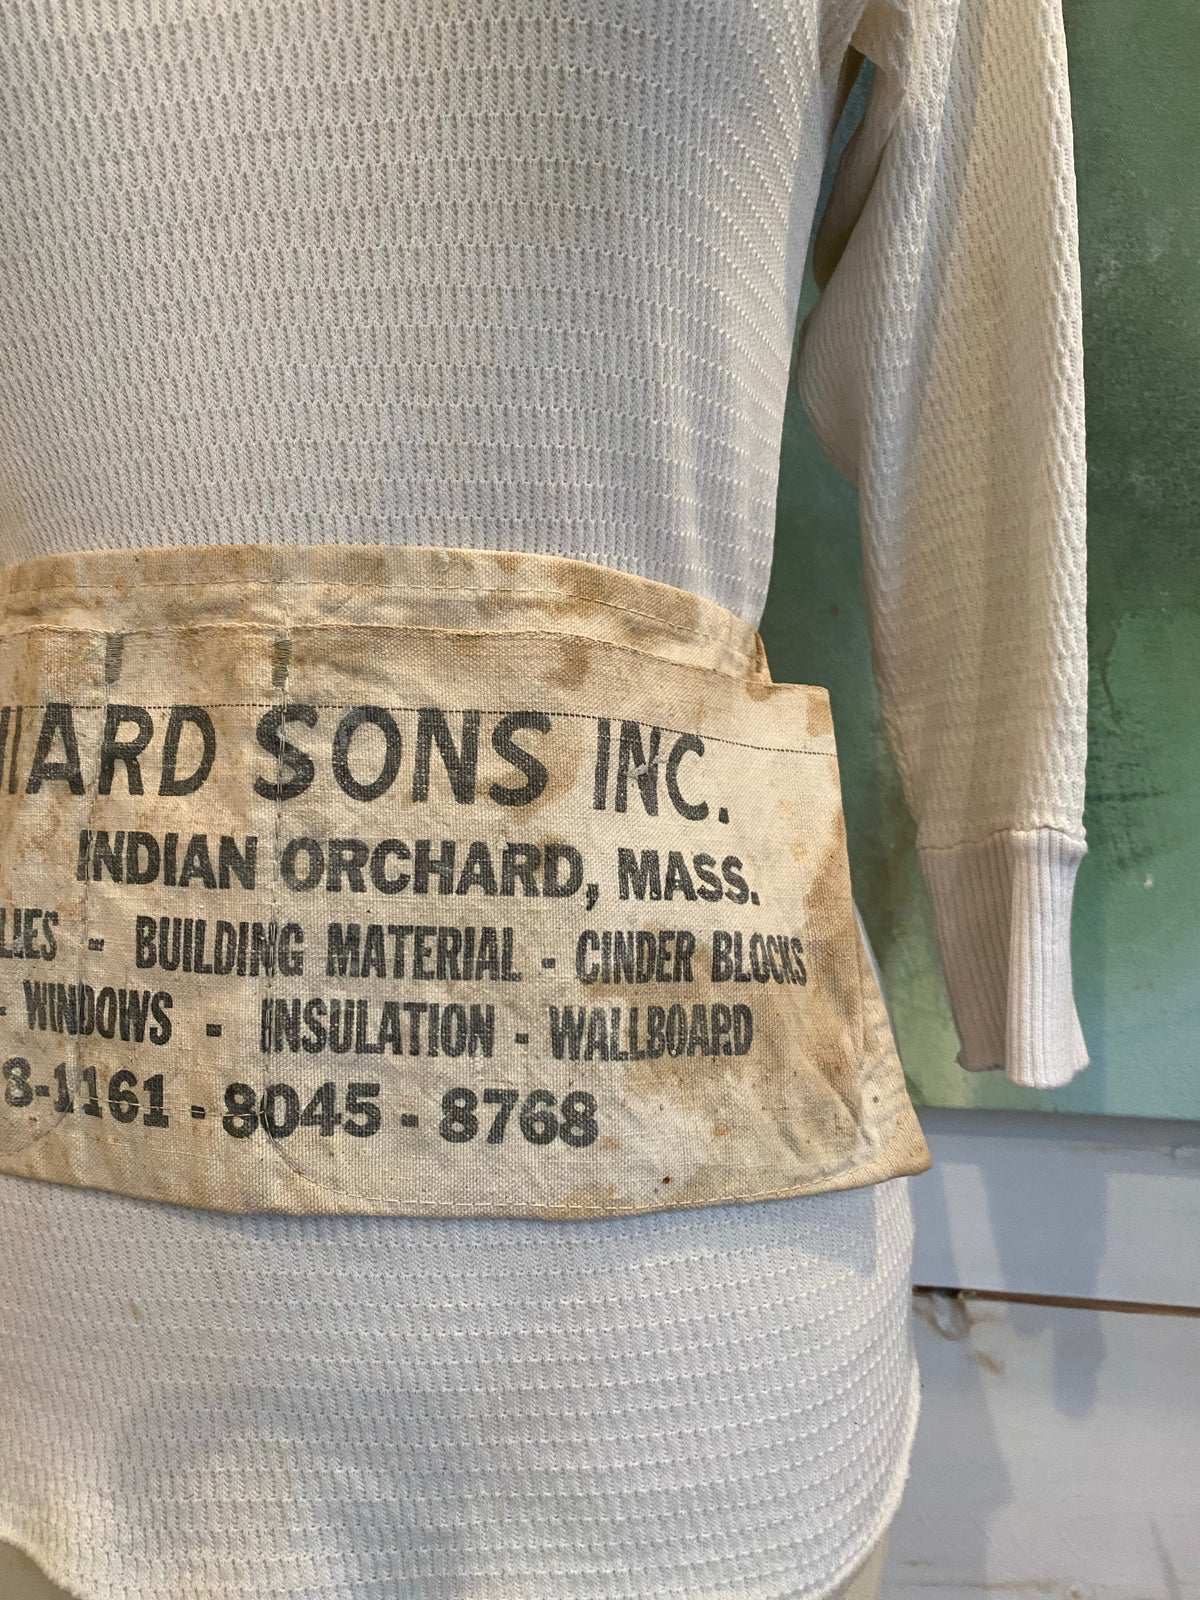 Vintage A. Boilard Sons Inc. Apron